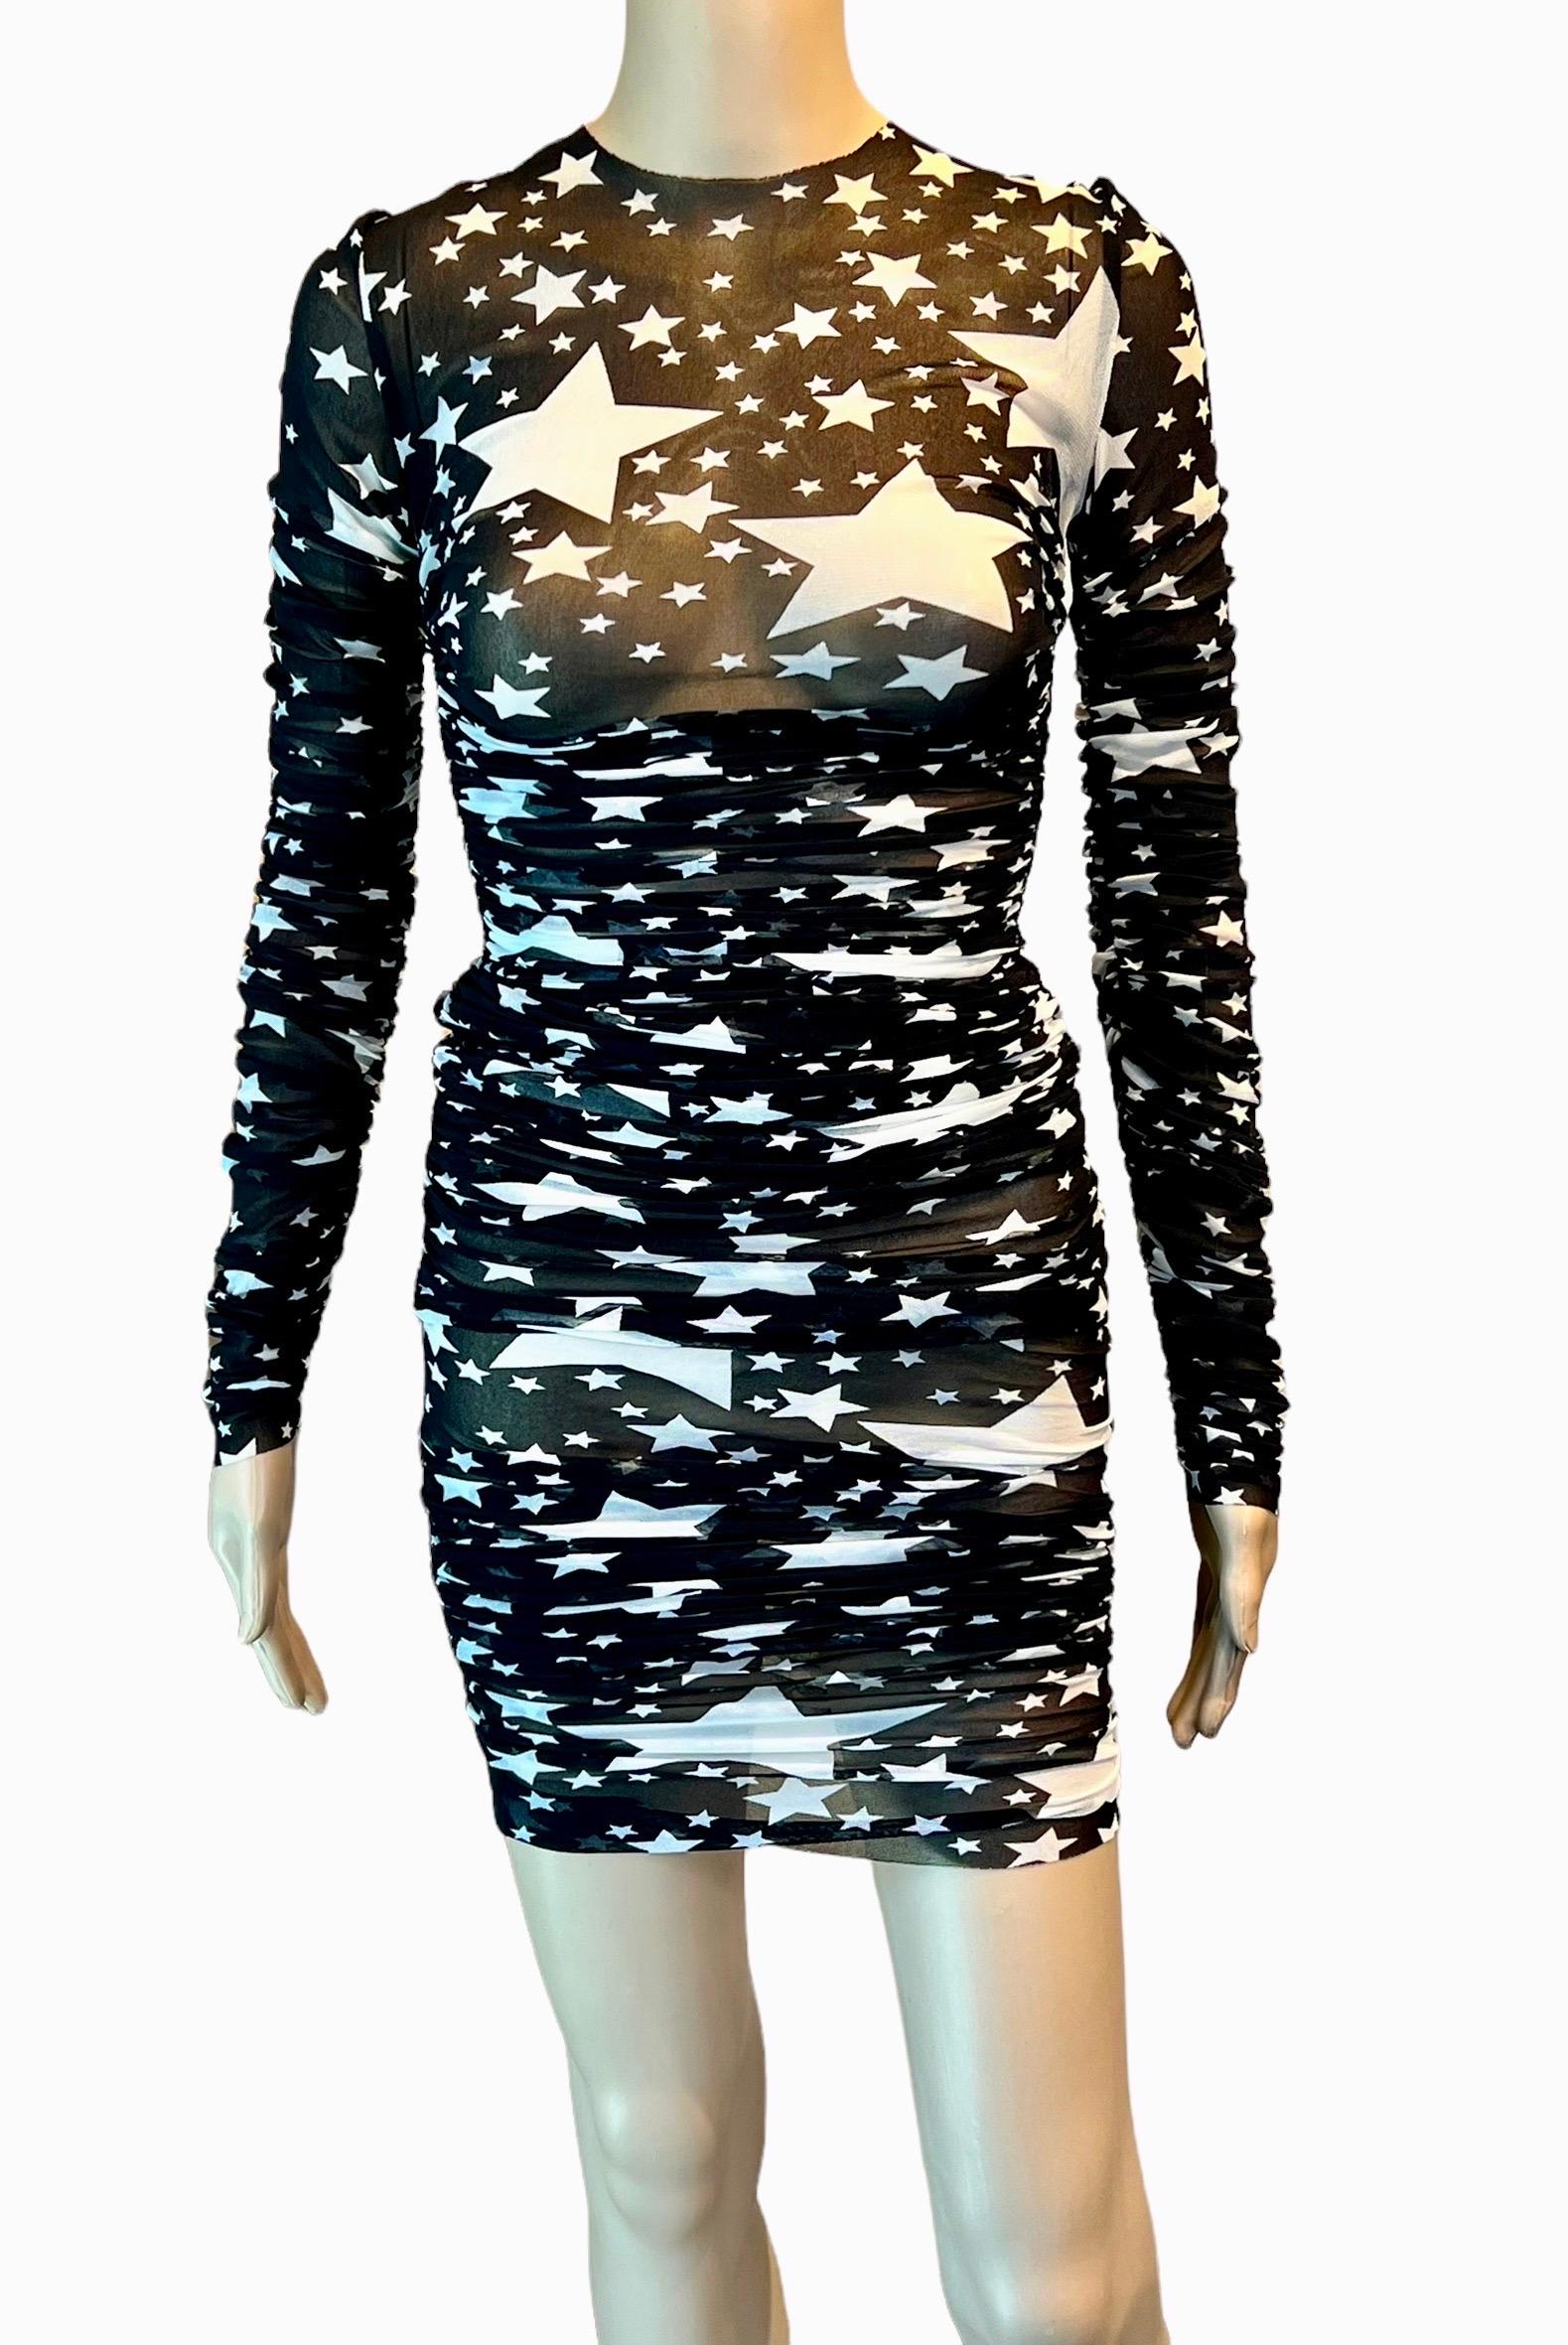 Dolce & Gabbana F/W 2011 Runway Star Print Sheer Mesh Ruched Maxi Evening Dress For Sale 3